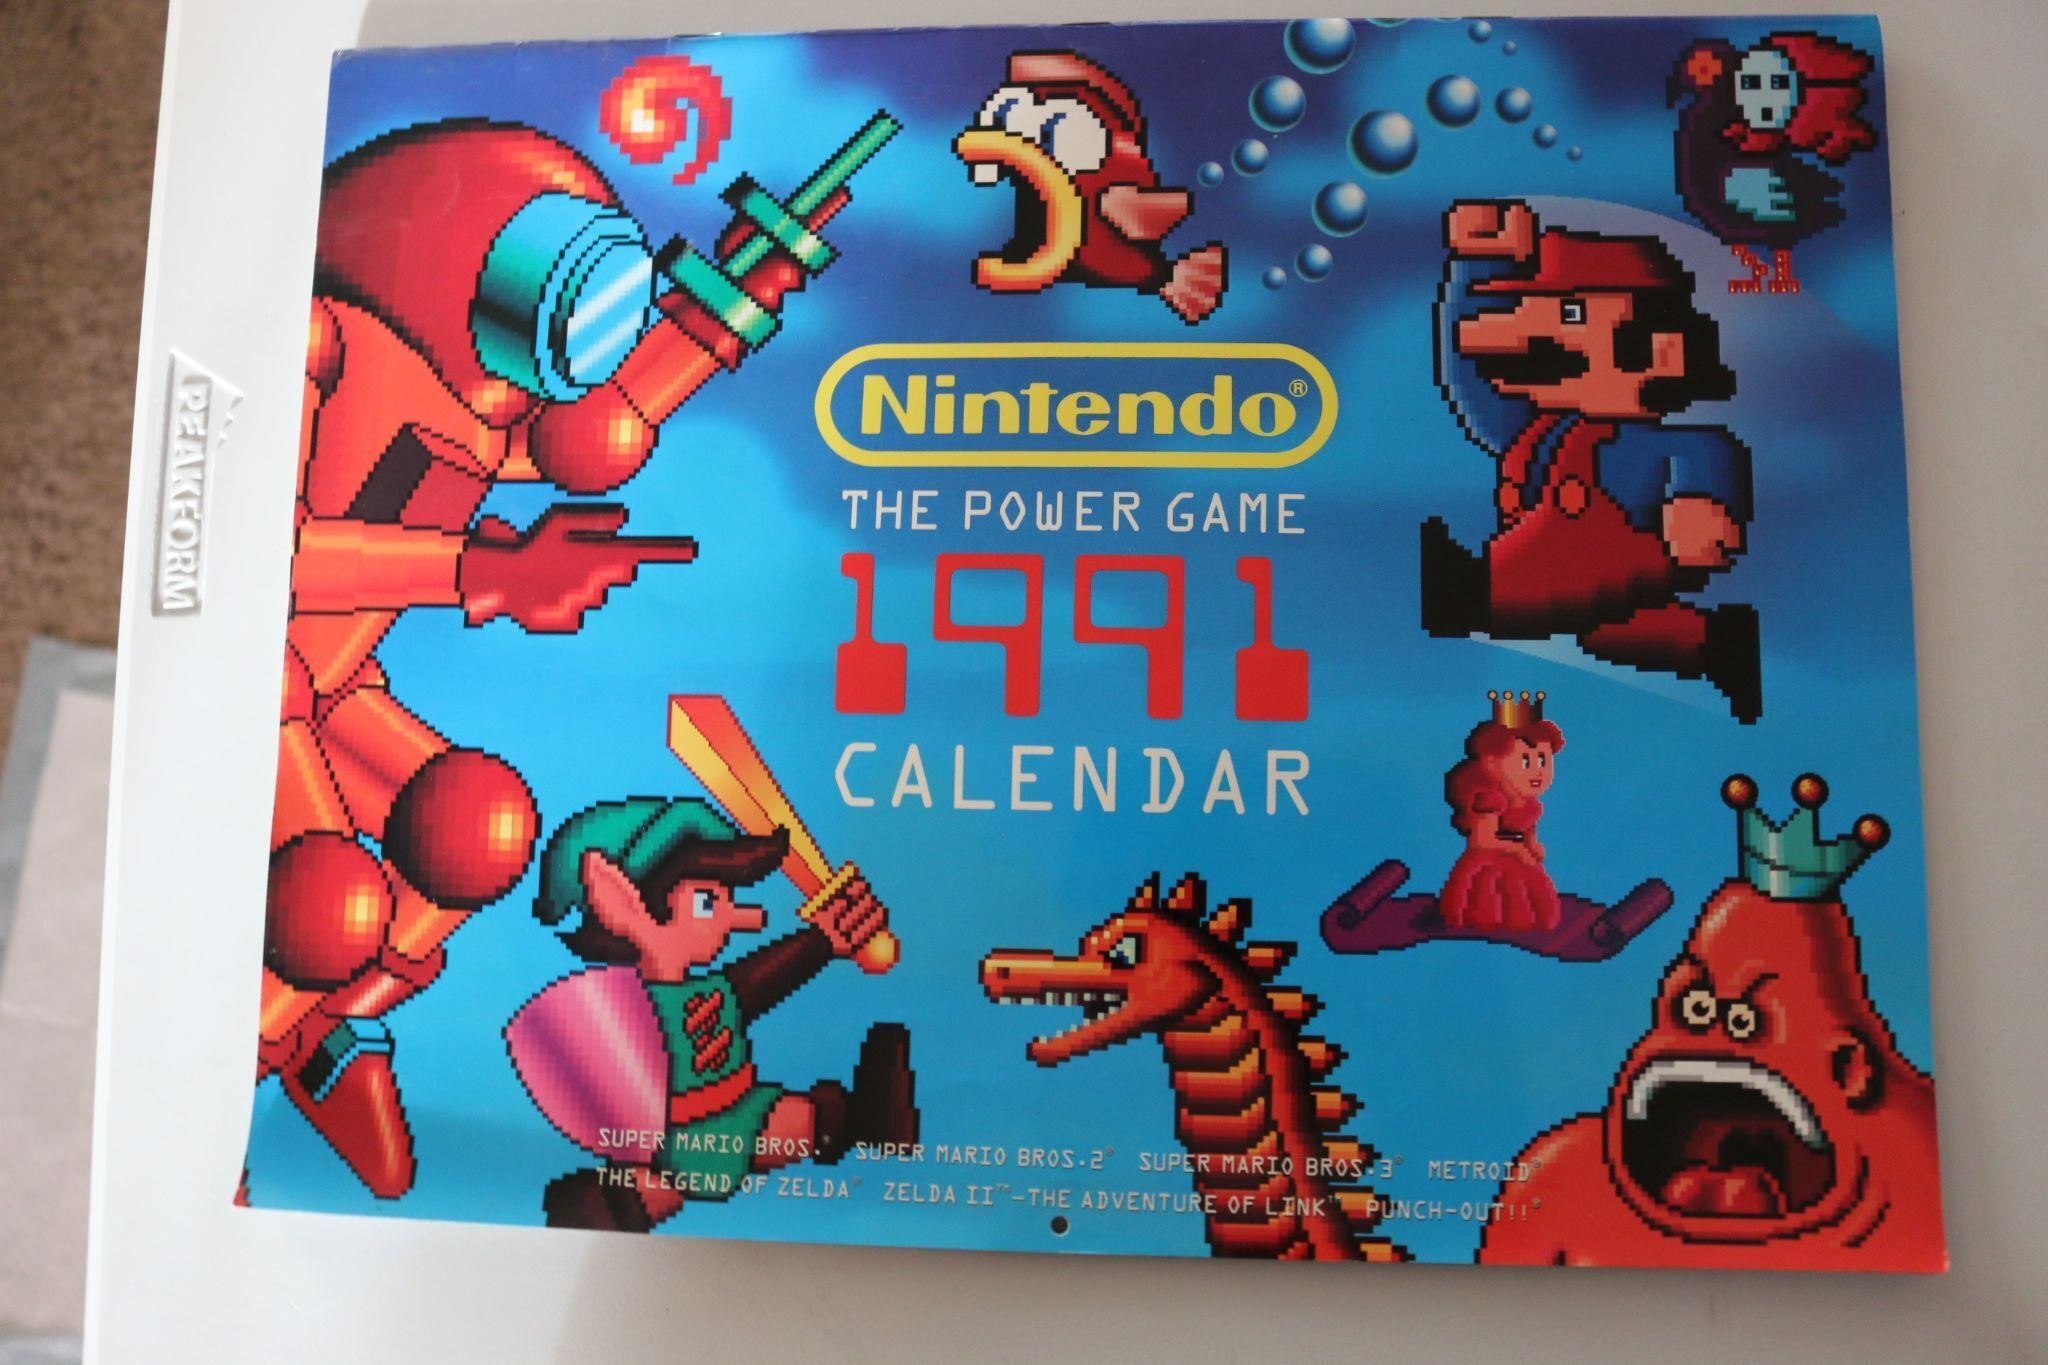 1991 Nintendo Calendar